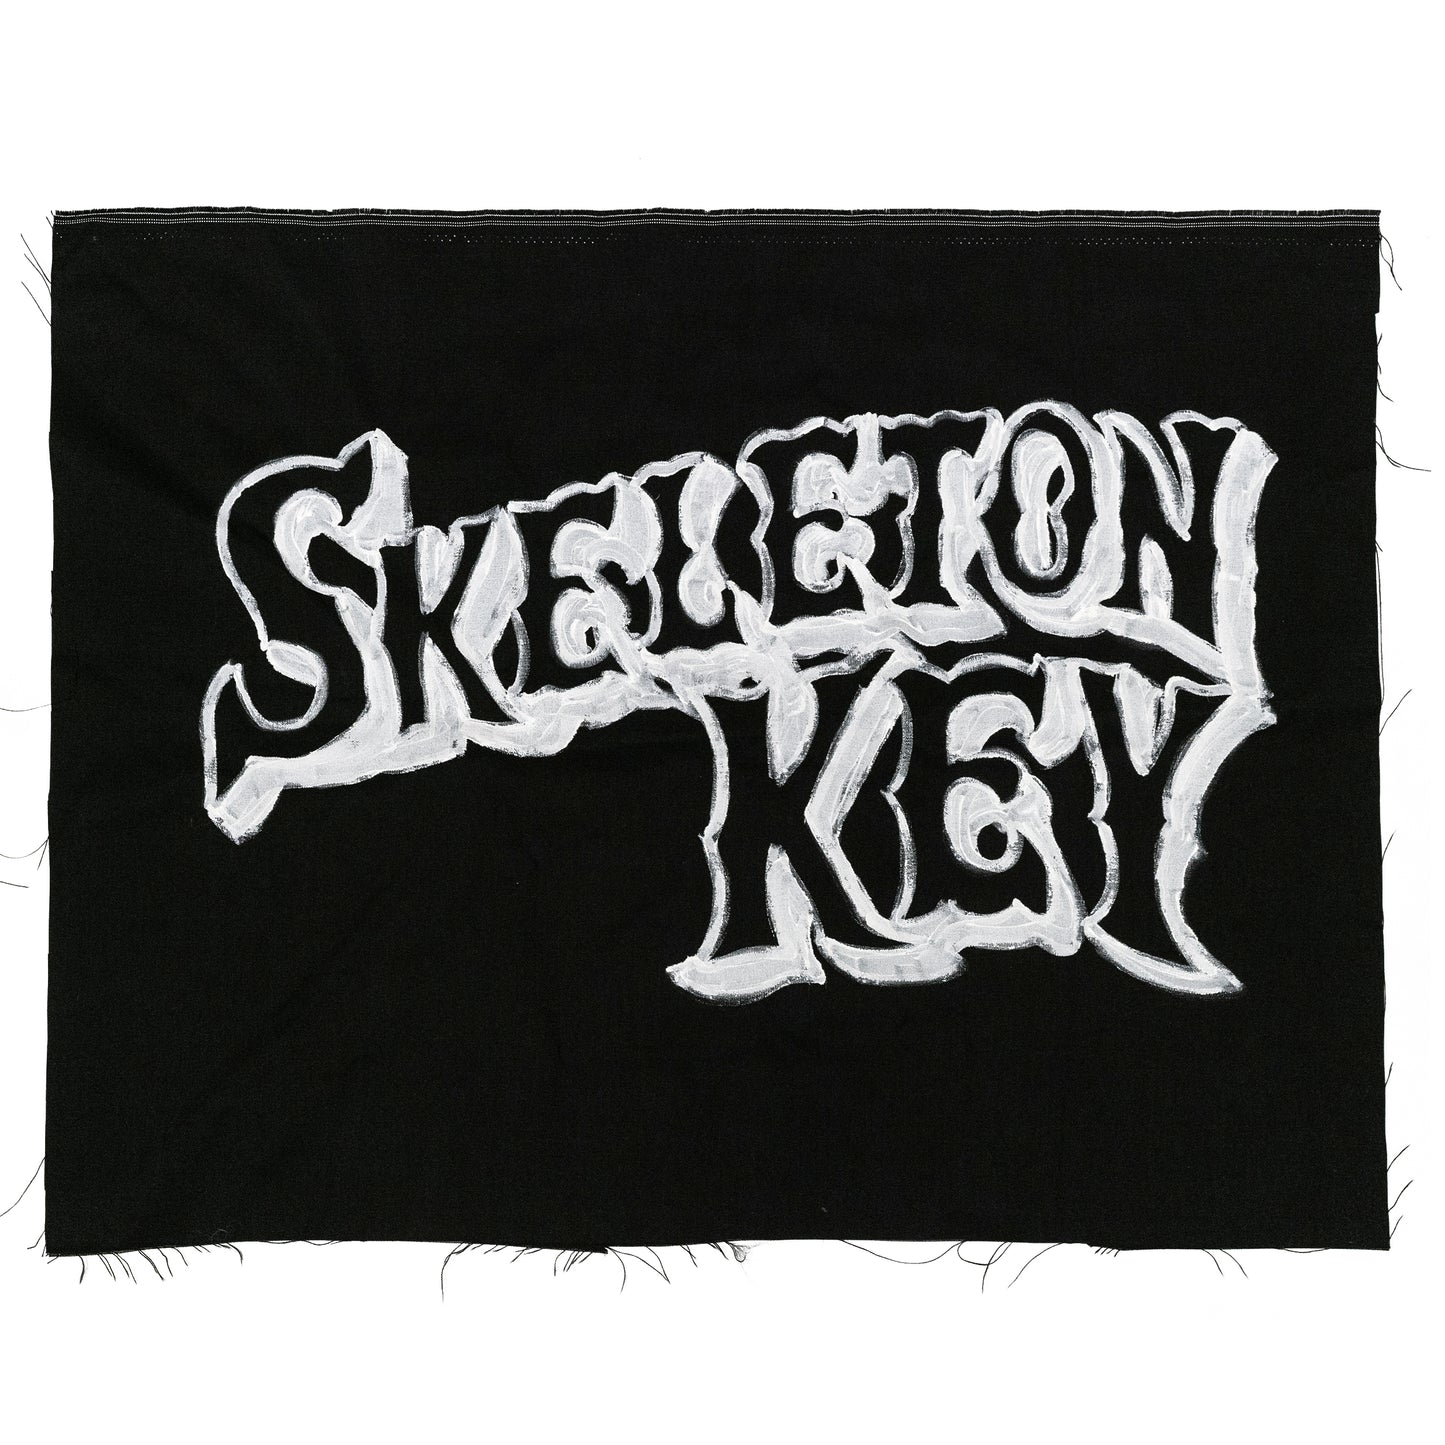 Hand Painted Skeleton Key logo canvas banner